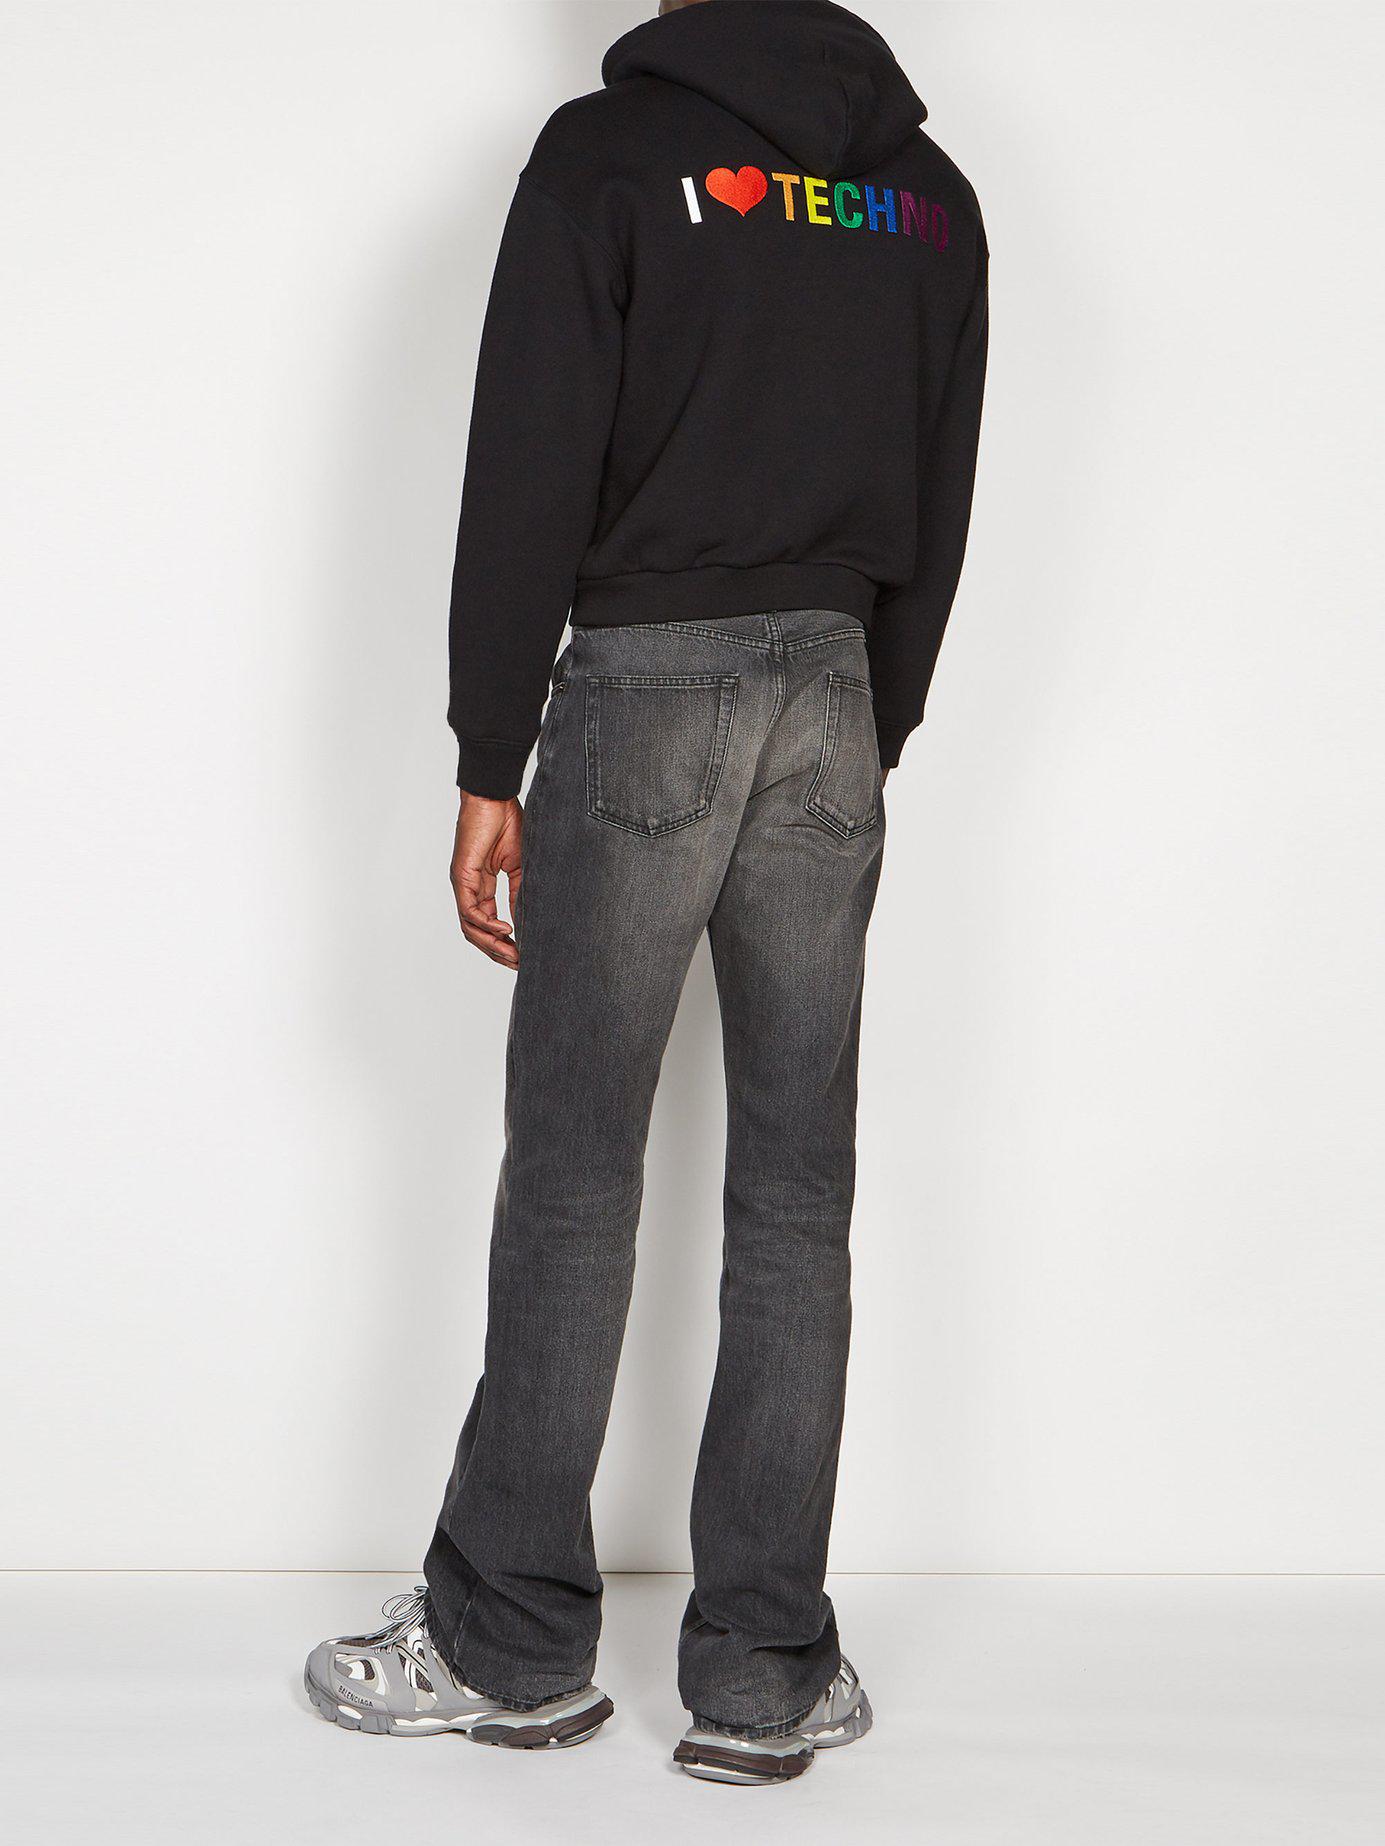 Balenciaga I Love Techno Zip Up Sweatshirt in Black for Men - Lyst